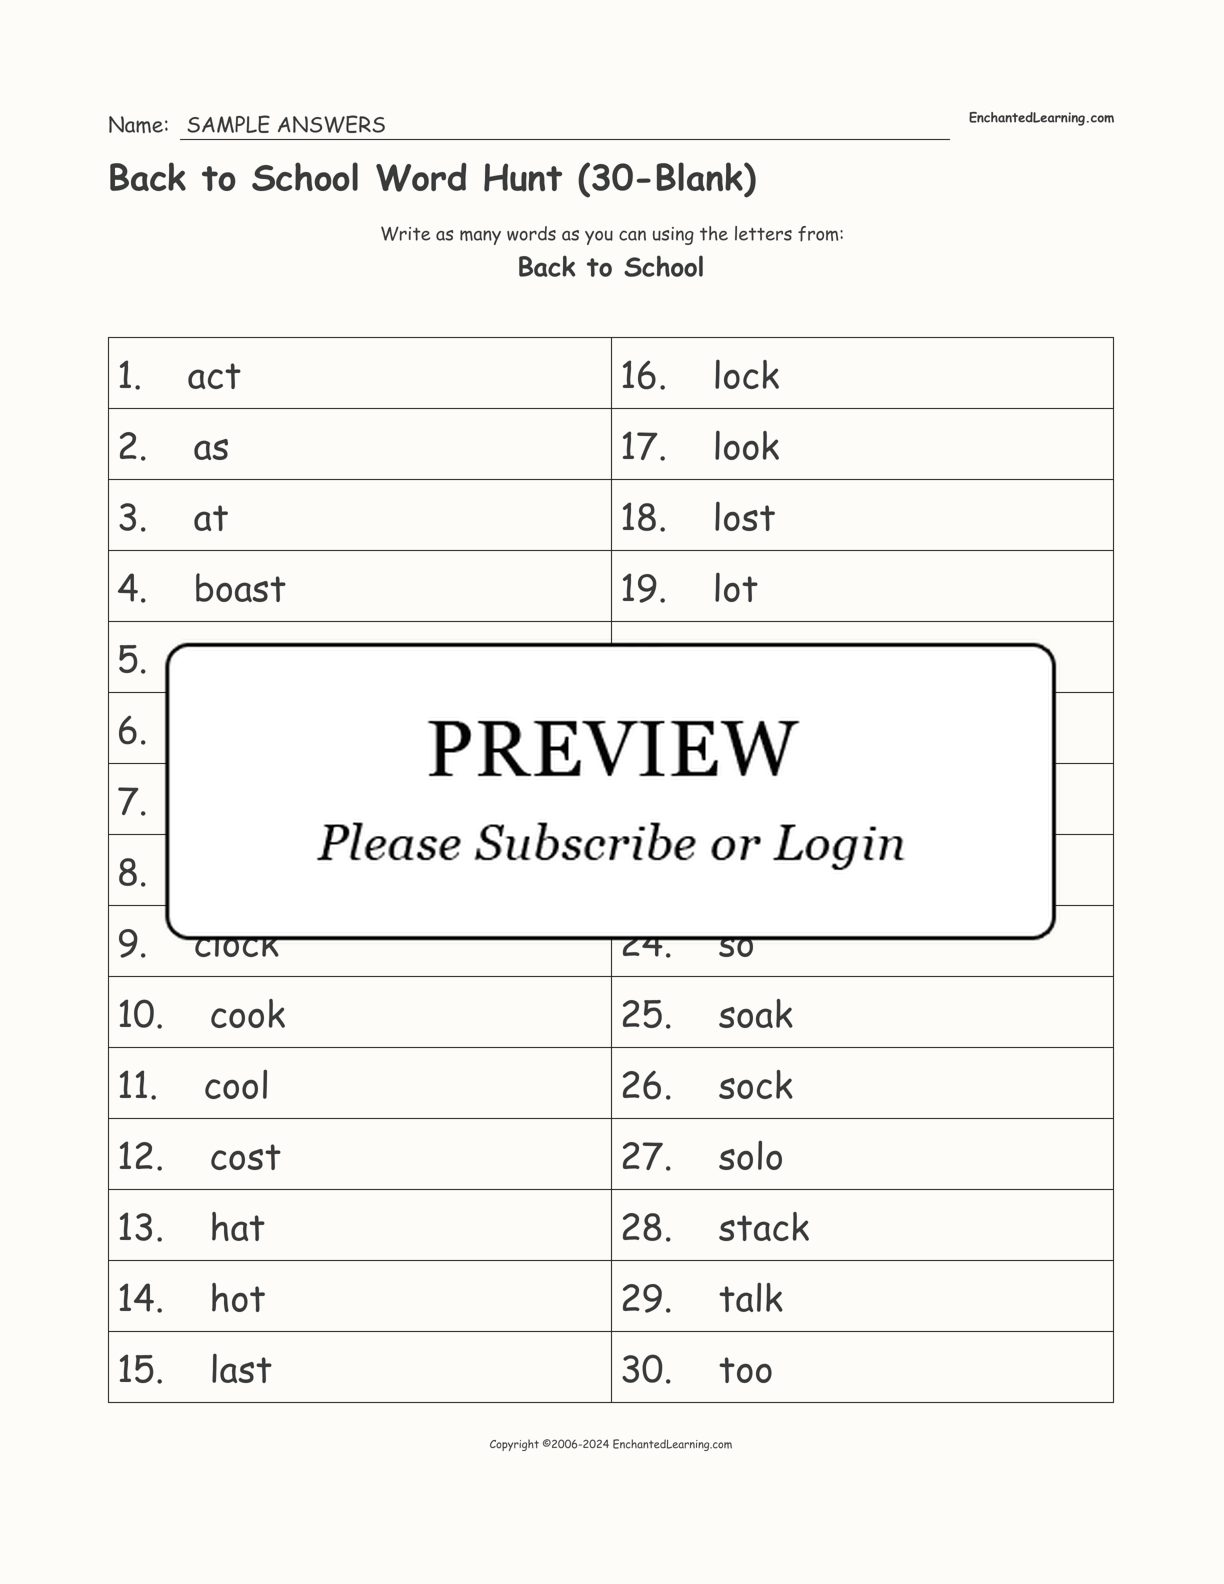 Back to School Word Hunt (30-Blank) interactive worksheet page 2